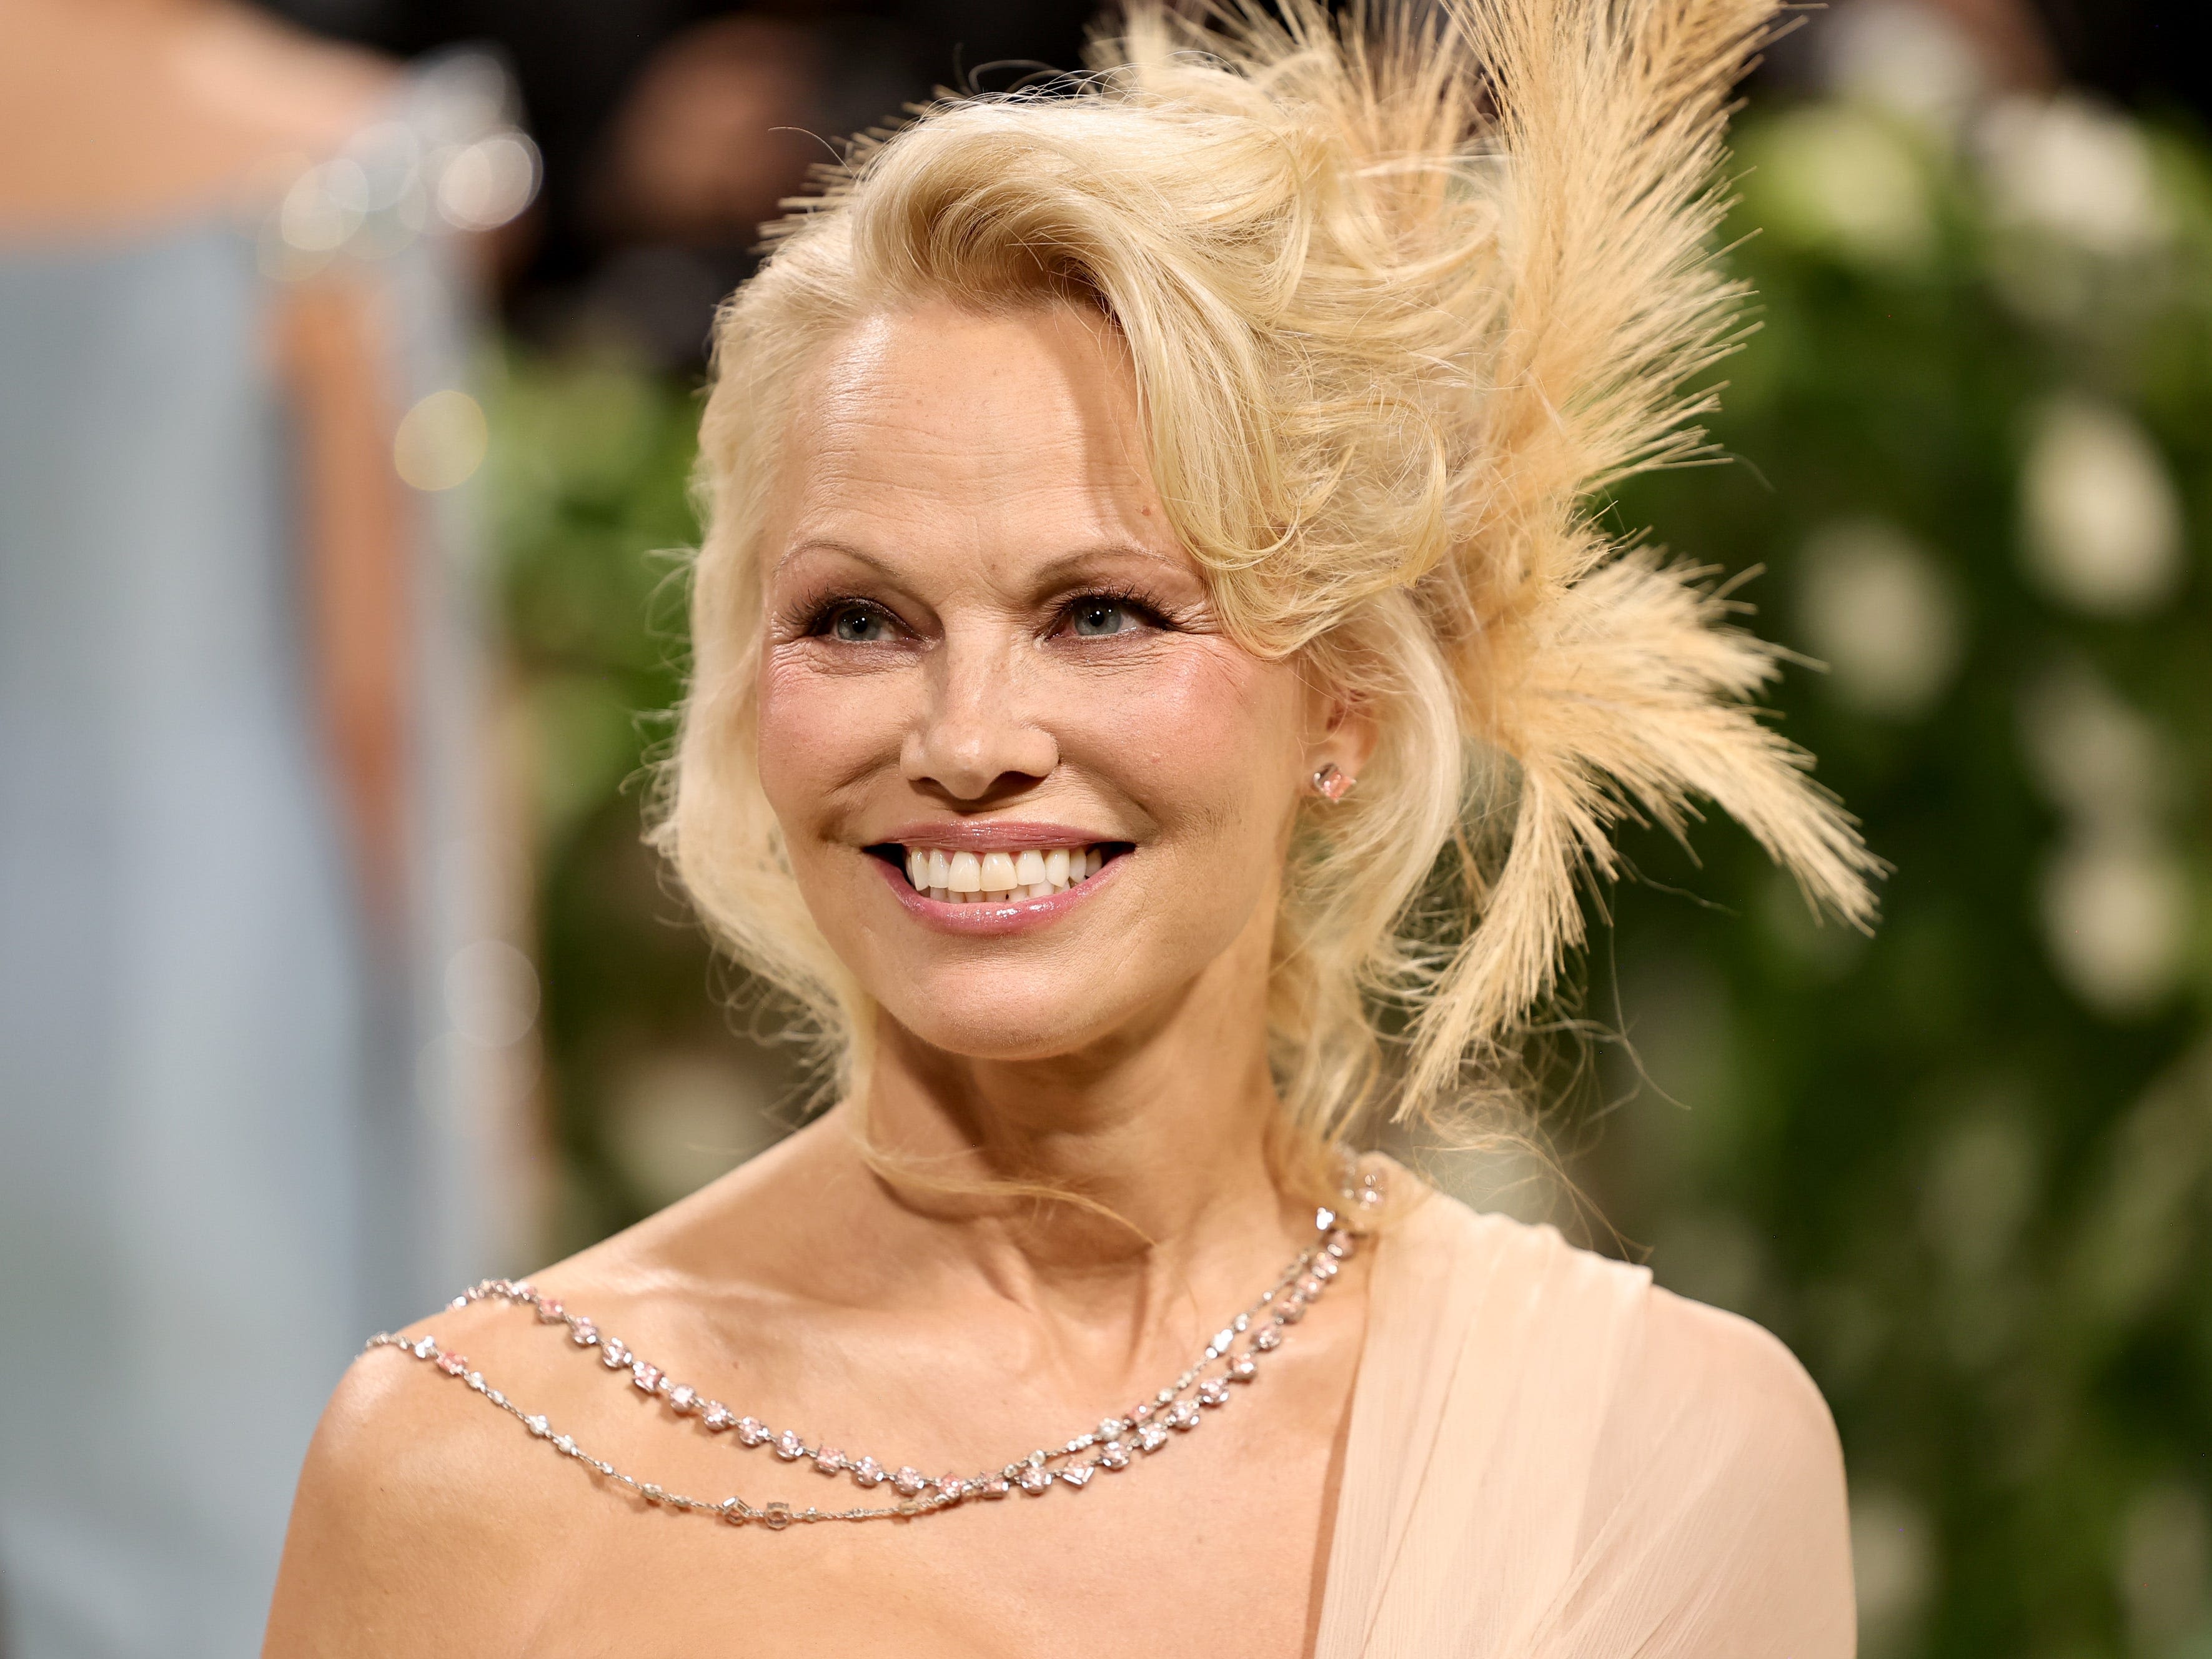 Pamela Anderson broke her makeup-free streak for her first Met Gala